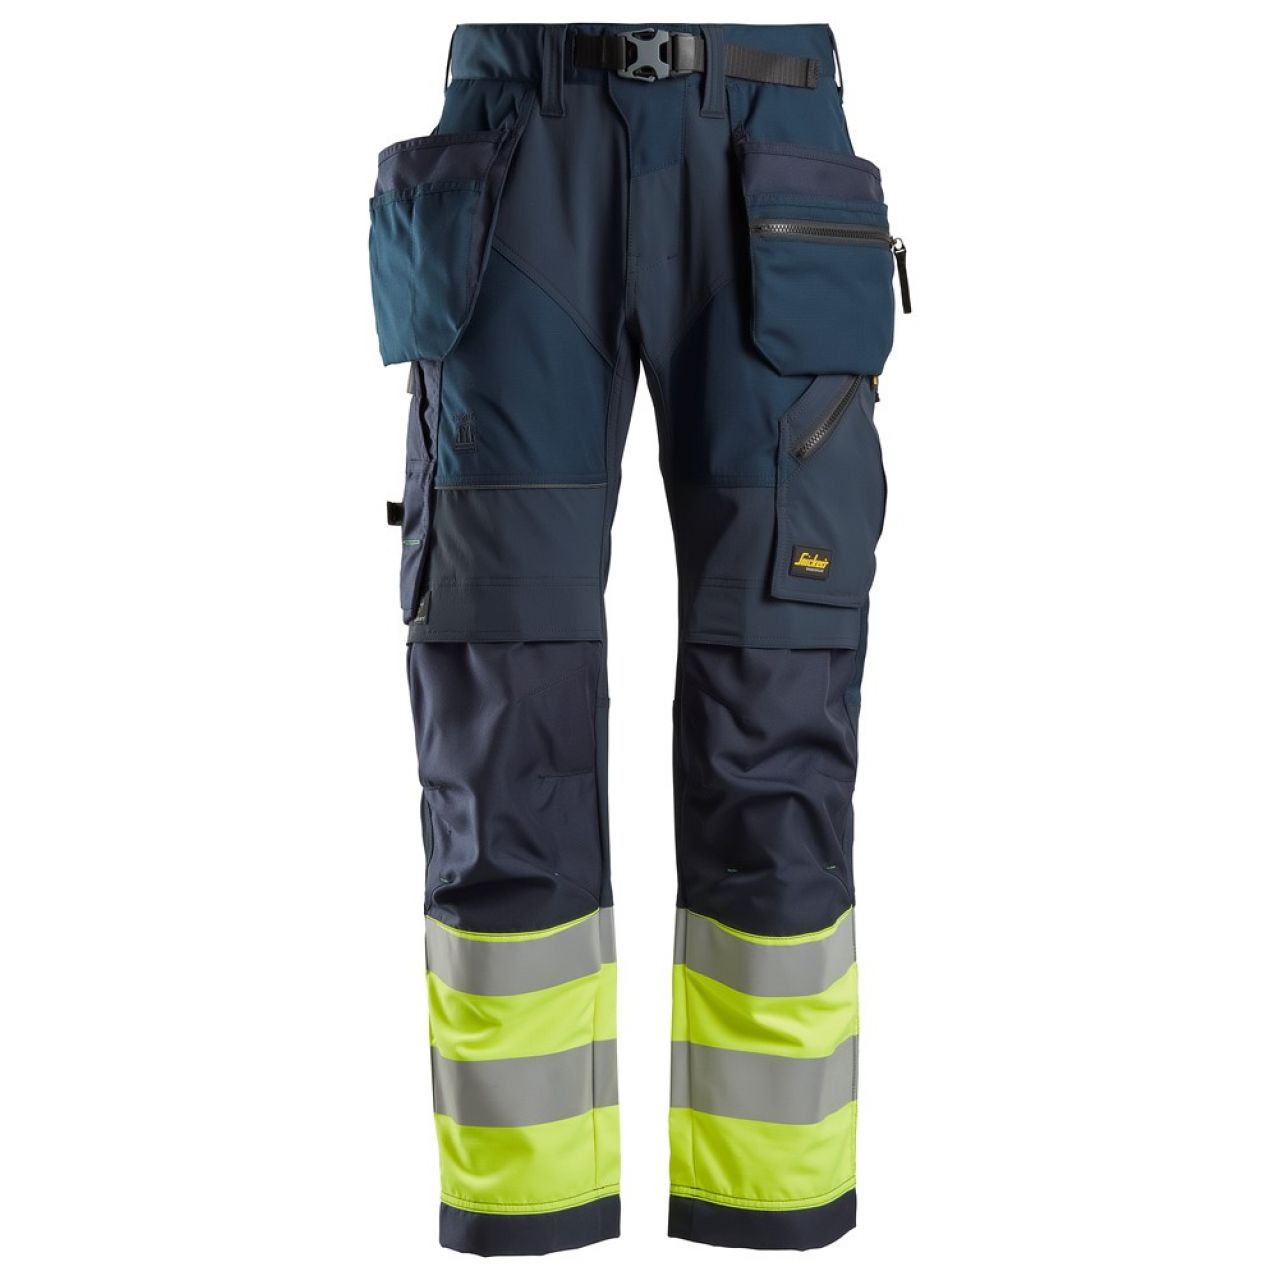 6931 Pantalones largos de trabajo de alta visibilidad clase 1 con bolsillos flotantes FlexiWork azul marino-amarillo talla 64